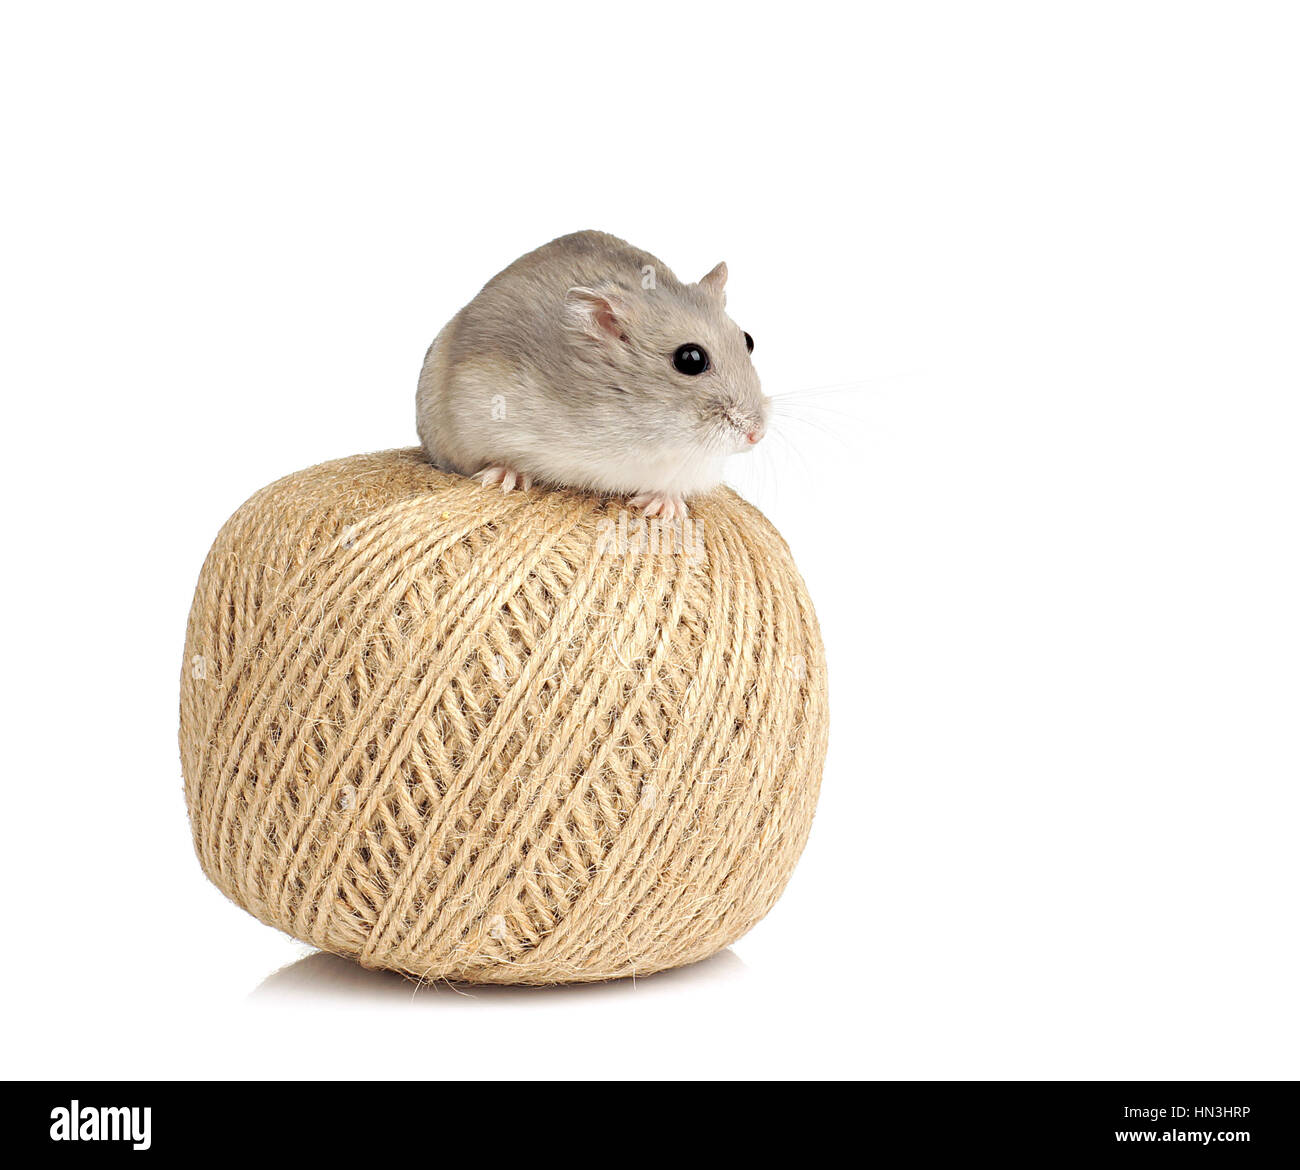 Dwarf Winter White Pet Hamster Sat on Ball of String on White Background Stock Photo